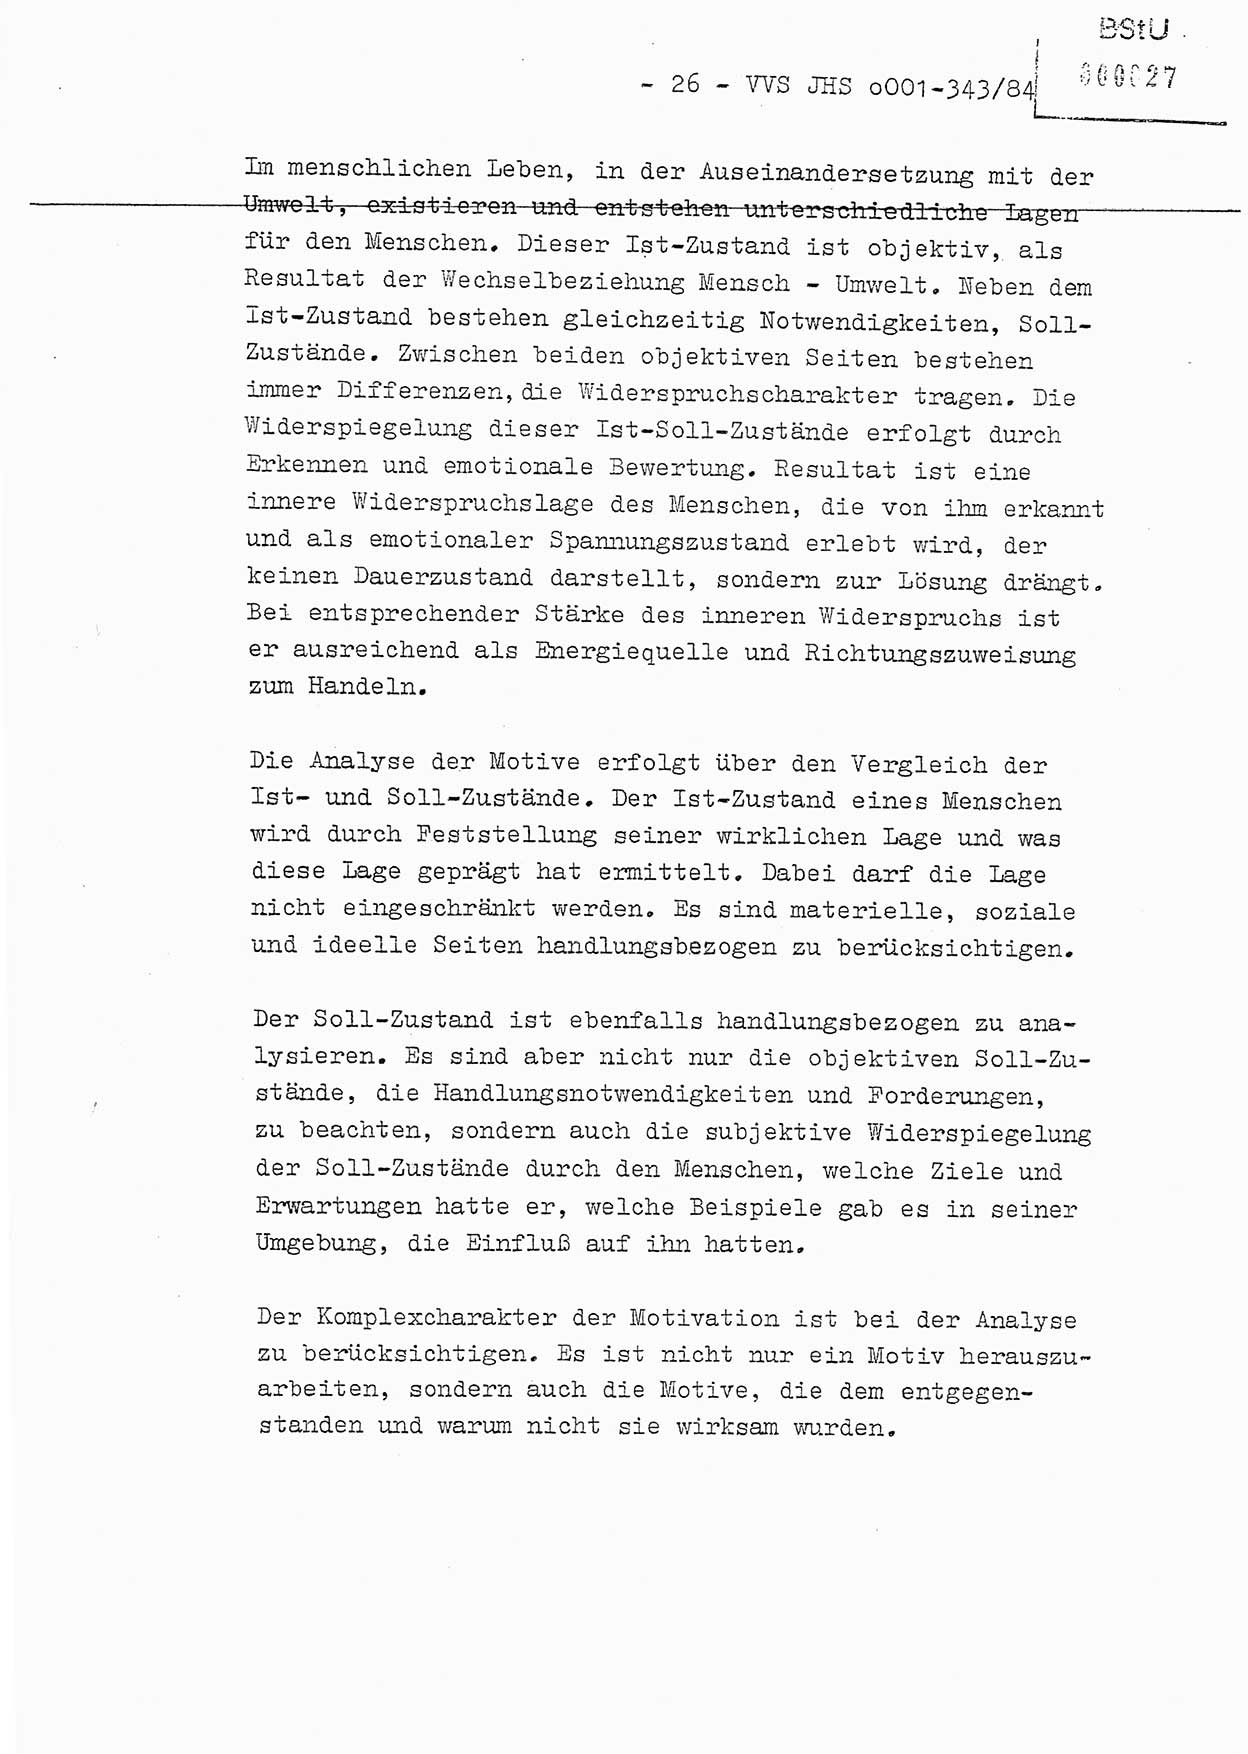 Diplomarbeit, Oberleutnant Bernd Michael (HA Ⅸ/5), Oberleutnant Peter Felber (HA IX/5), Ministerium für Staatssicherheit (MfS) [Deutsche Demokratische Republik (DDR)], Juristische Hochschule (JHS), Vertrauliche Verschlußsache (VVS) o001-343/84, Potsdam 1985, Seite 26 (Dipl.-Arb. MfS DDR JHS VVS o001-343/84 1985, S. 26)